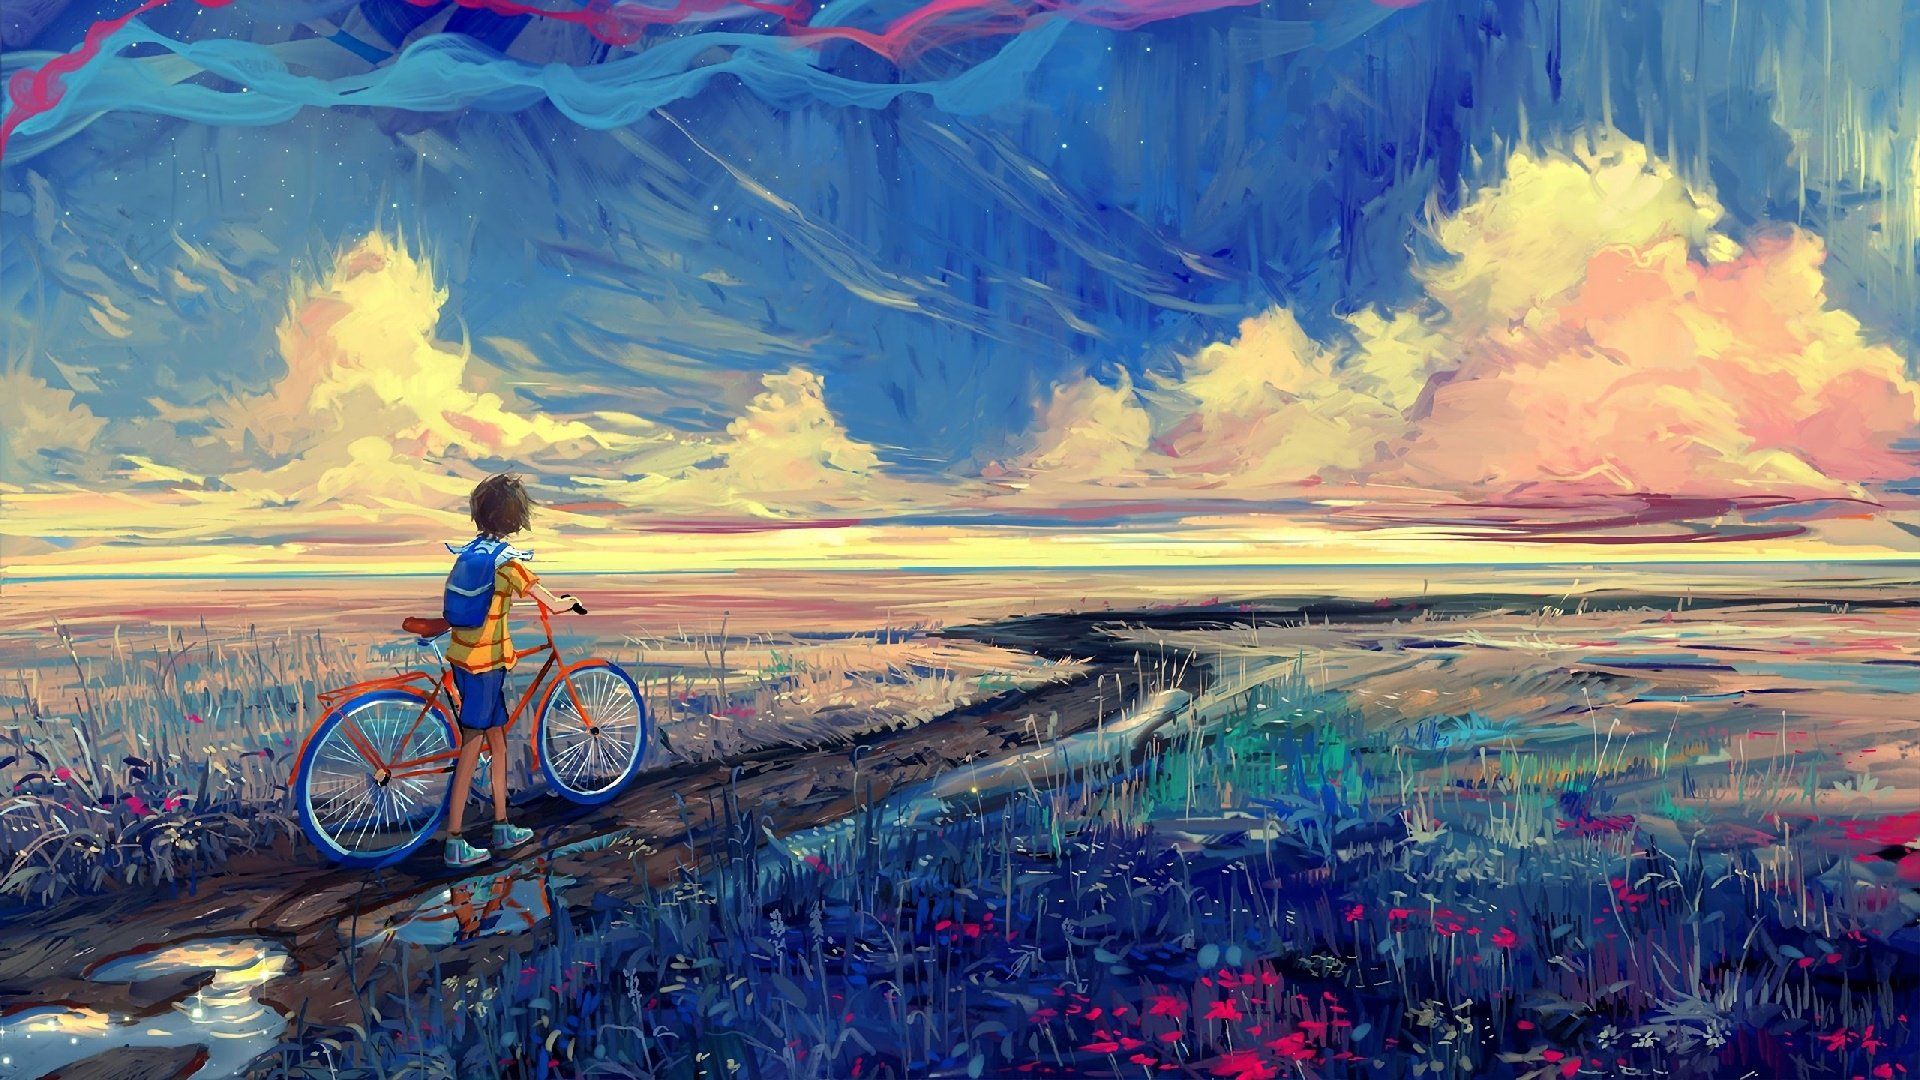 Boy and his Bike in Fantasy Landscape HD Wallpaper